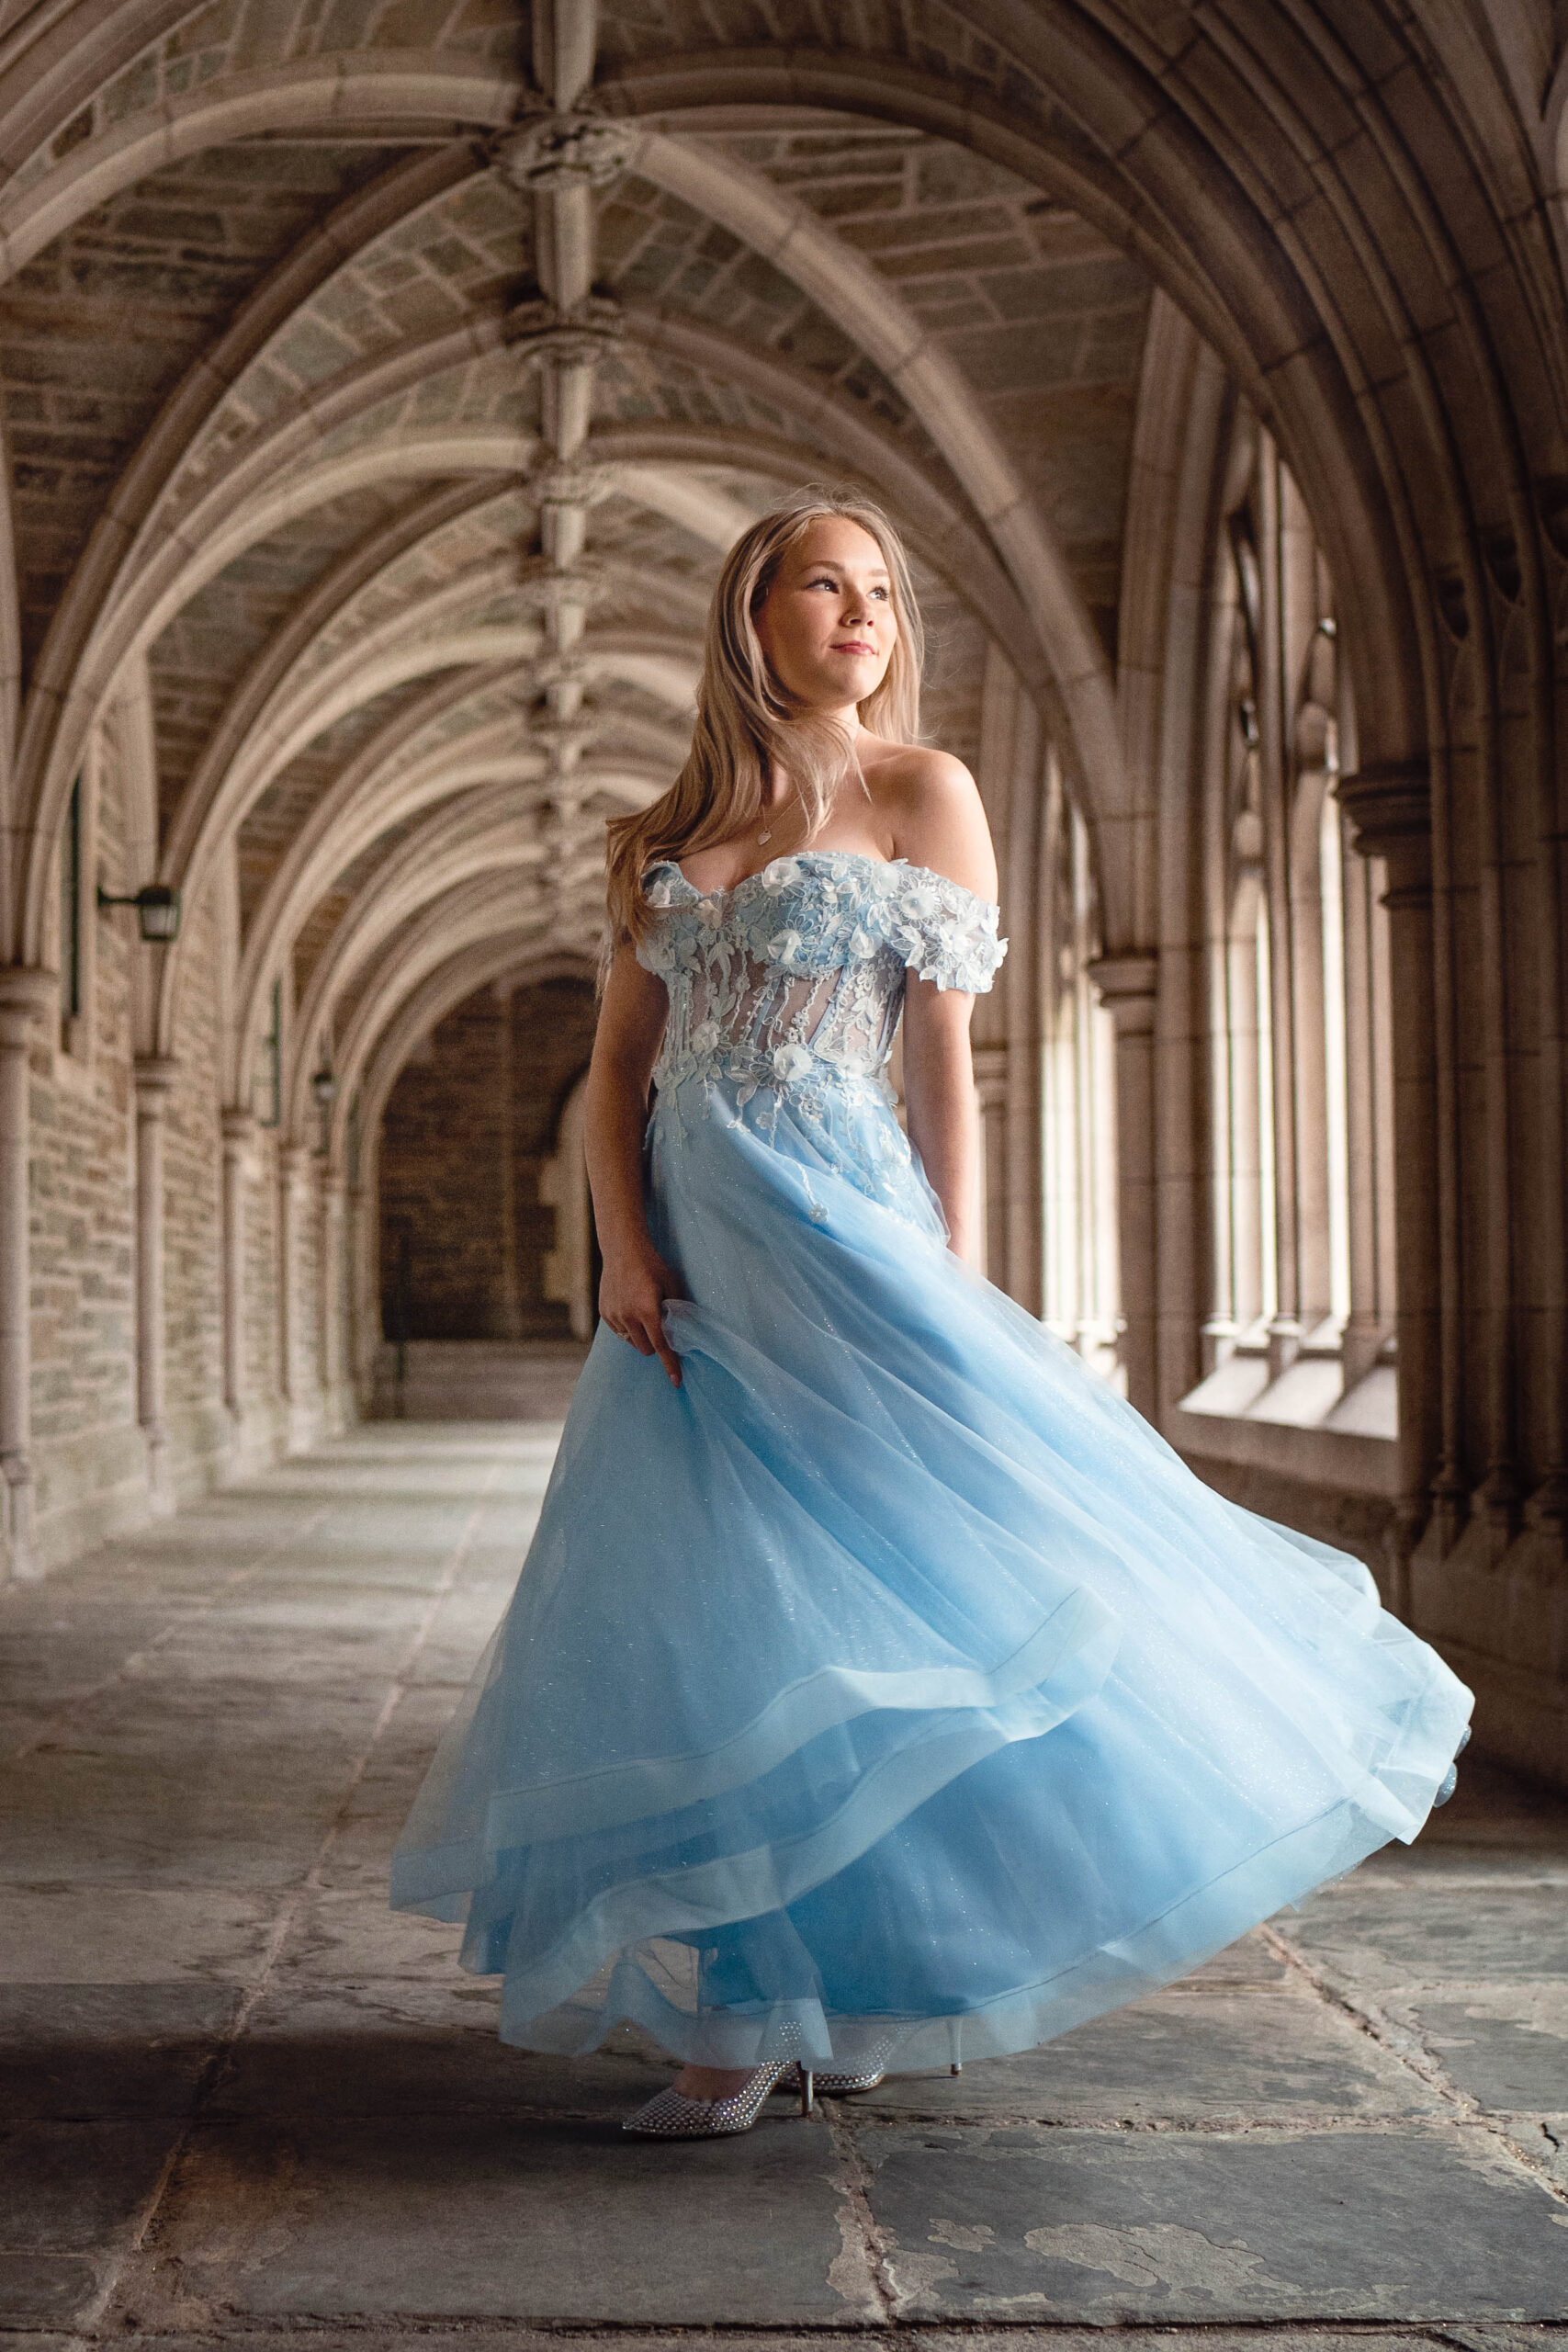 beautiful blonde high school senior wearing a light blue fairytale gown in a castle like setting